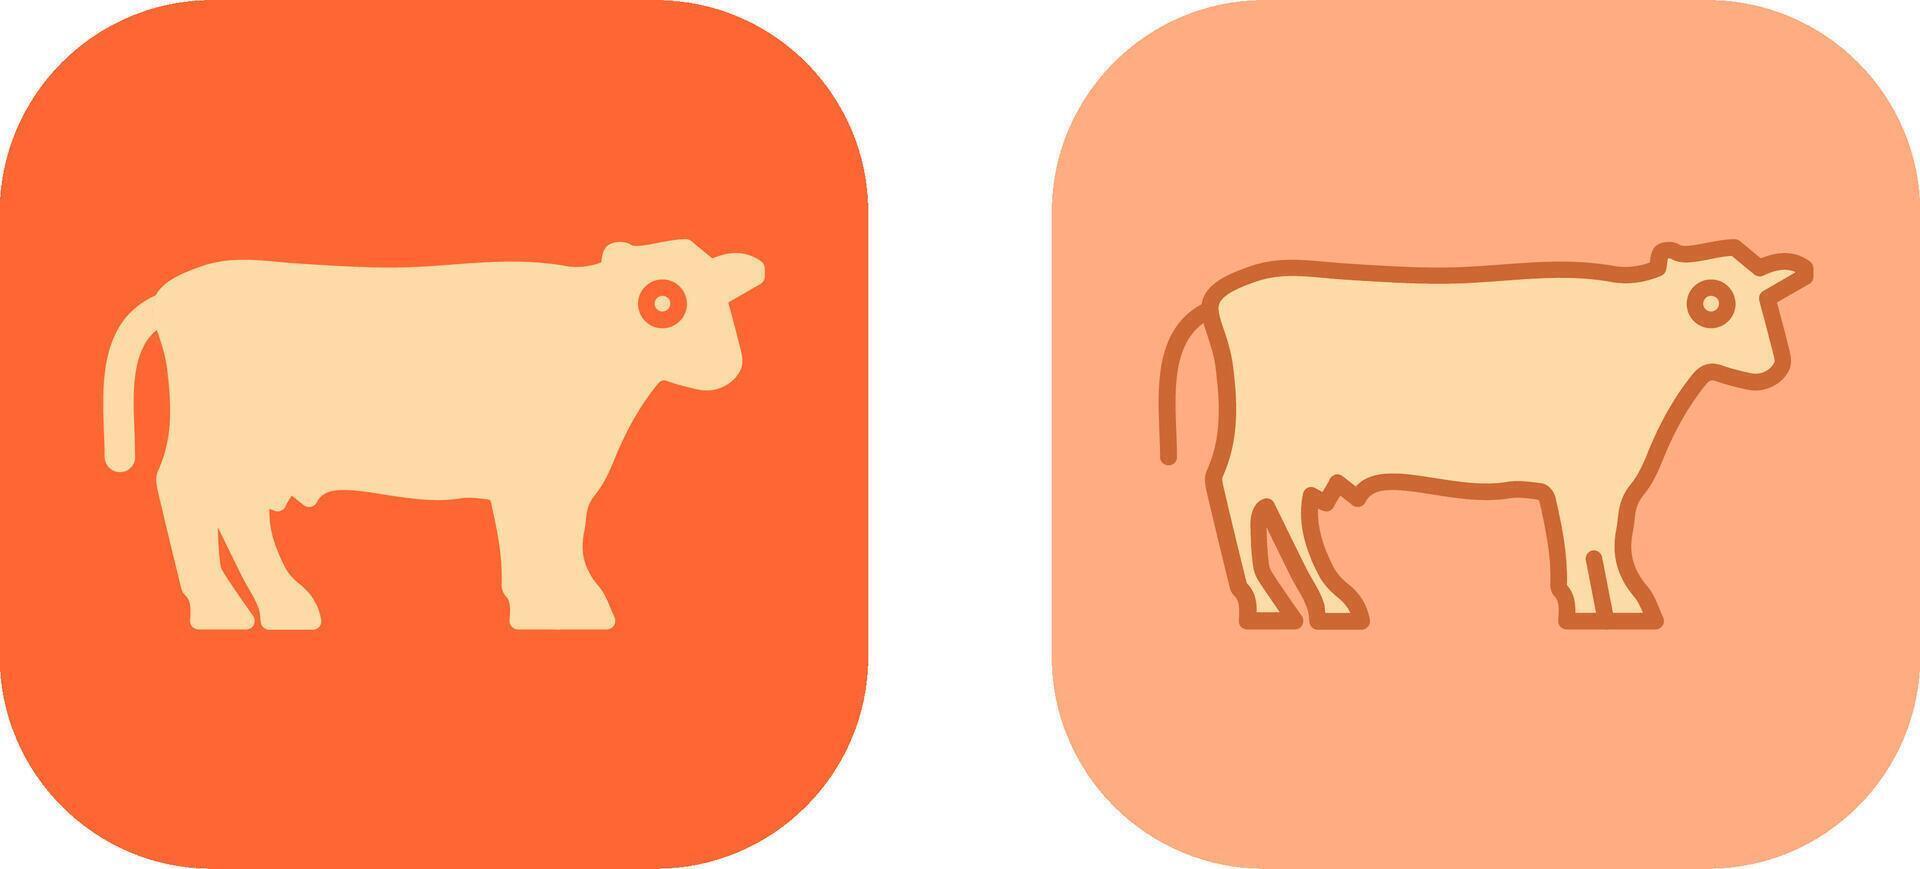 Cattle Icon Design vector